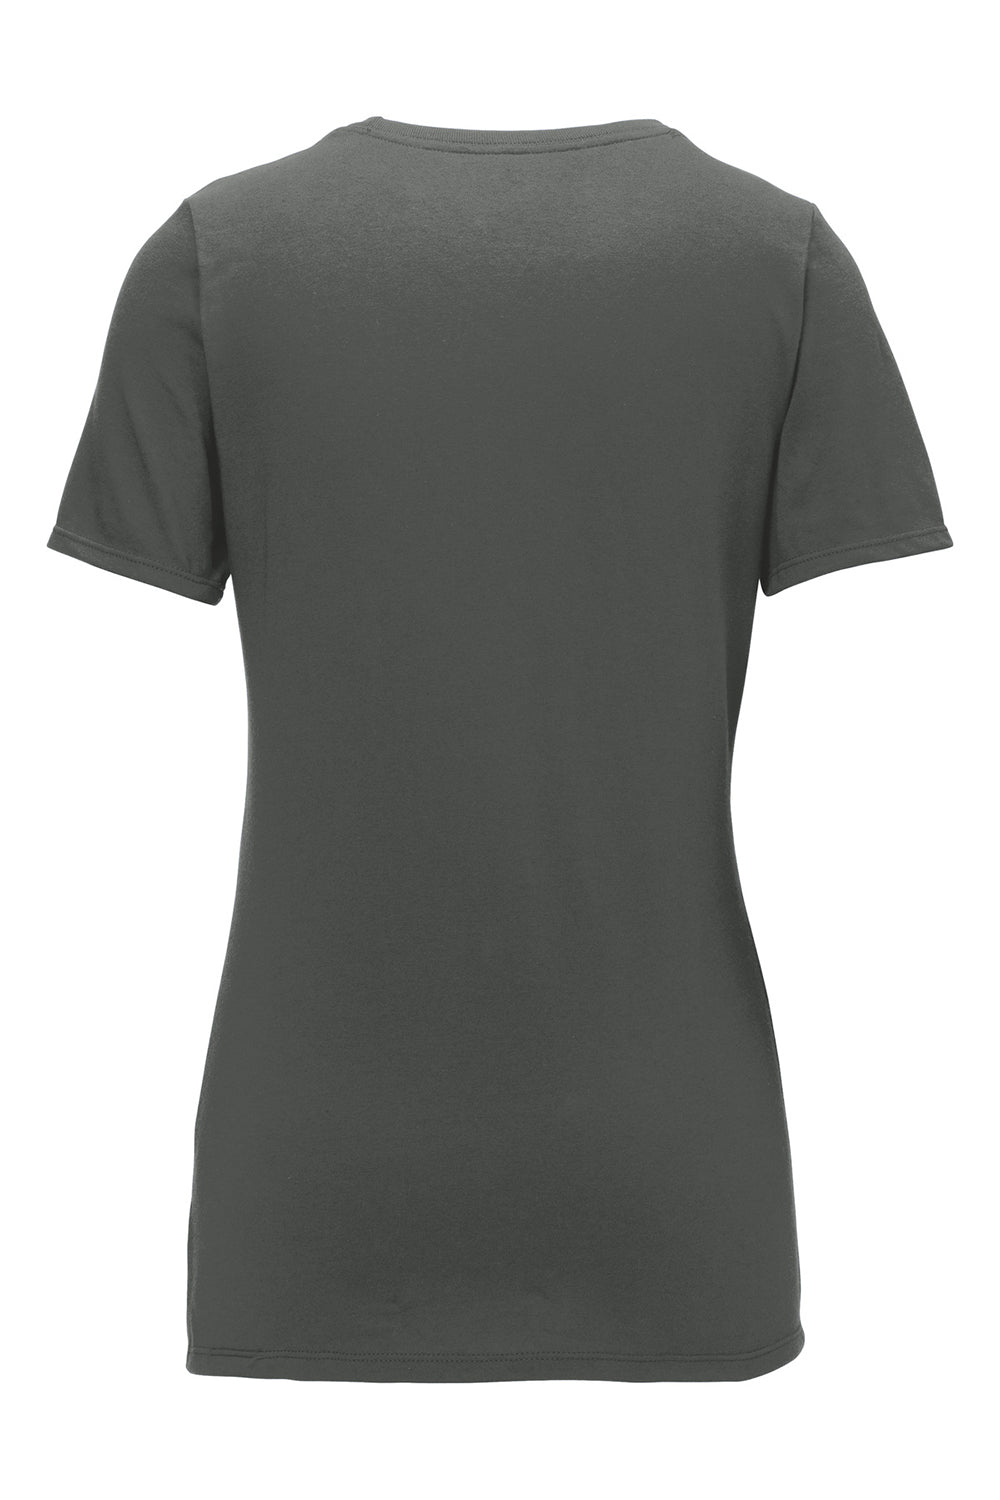 Nike NKBQ5234 Womens Dri-Fit Moisture Wicking Short Sleeve Scoop Neck T-Shirt Anthracite Grey Flat Back